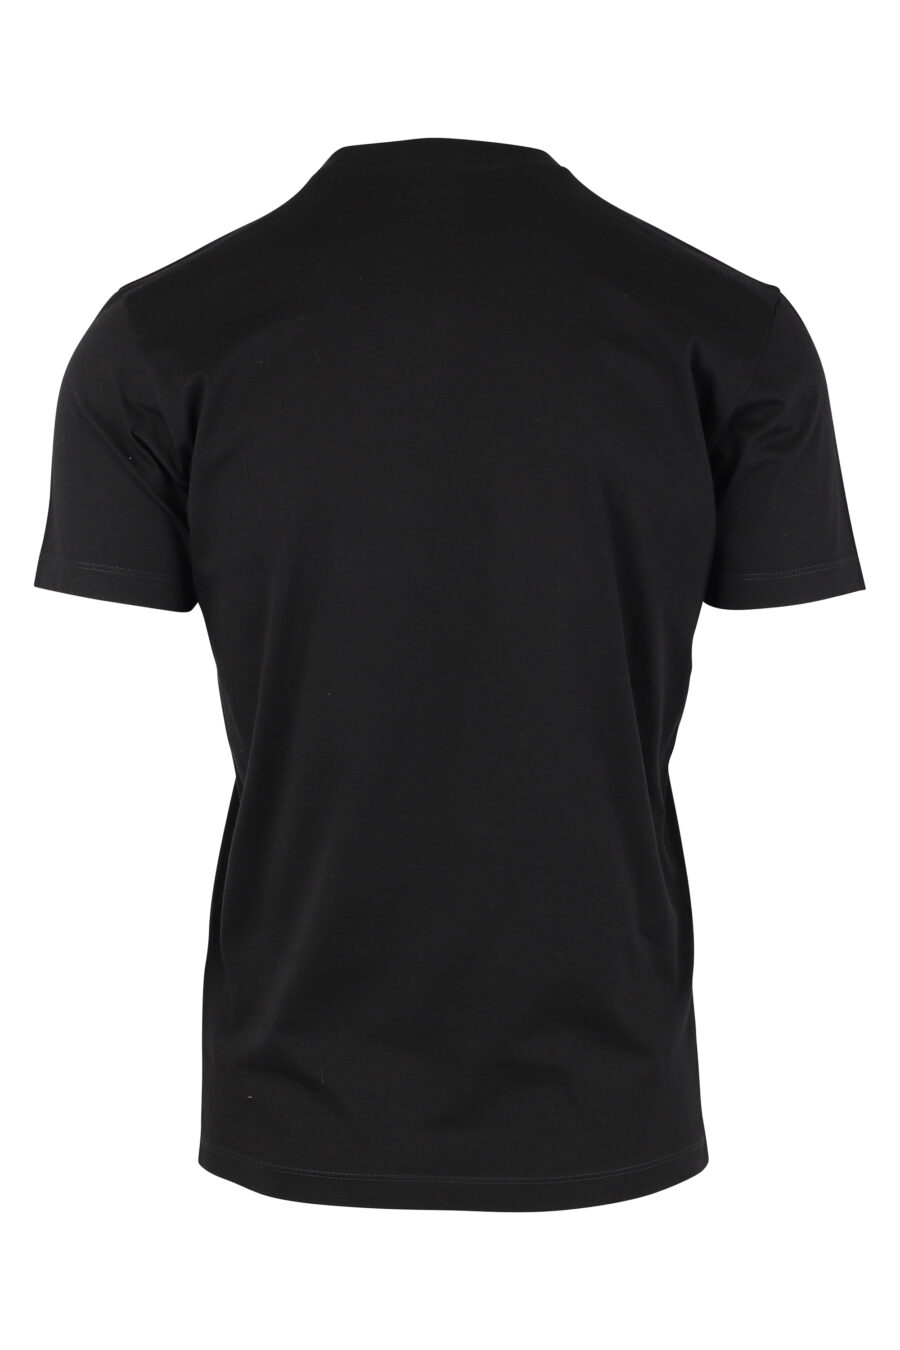 Schwarzes T-Shirt mit Minilogo "Icon" - IMG 9767